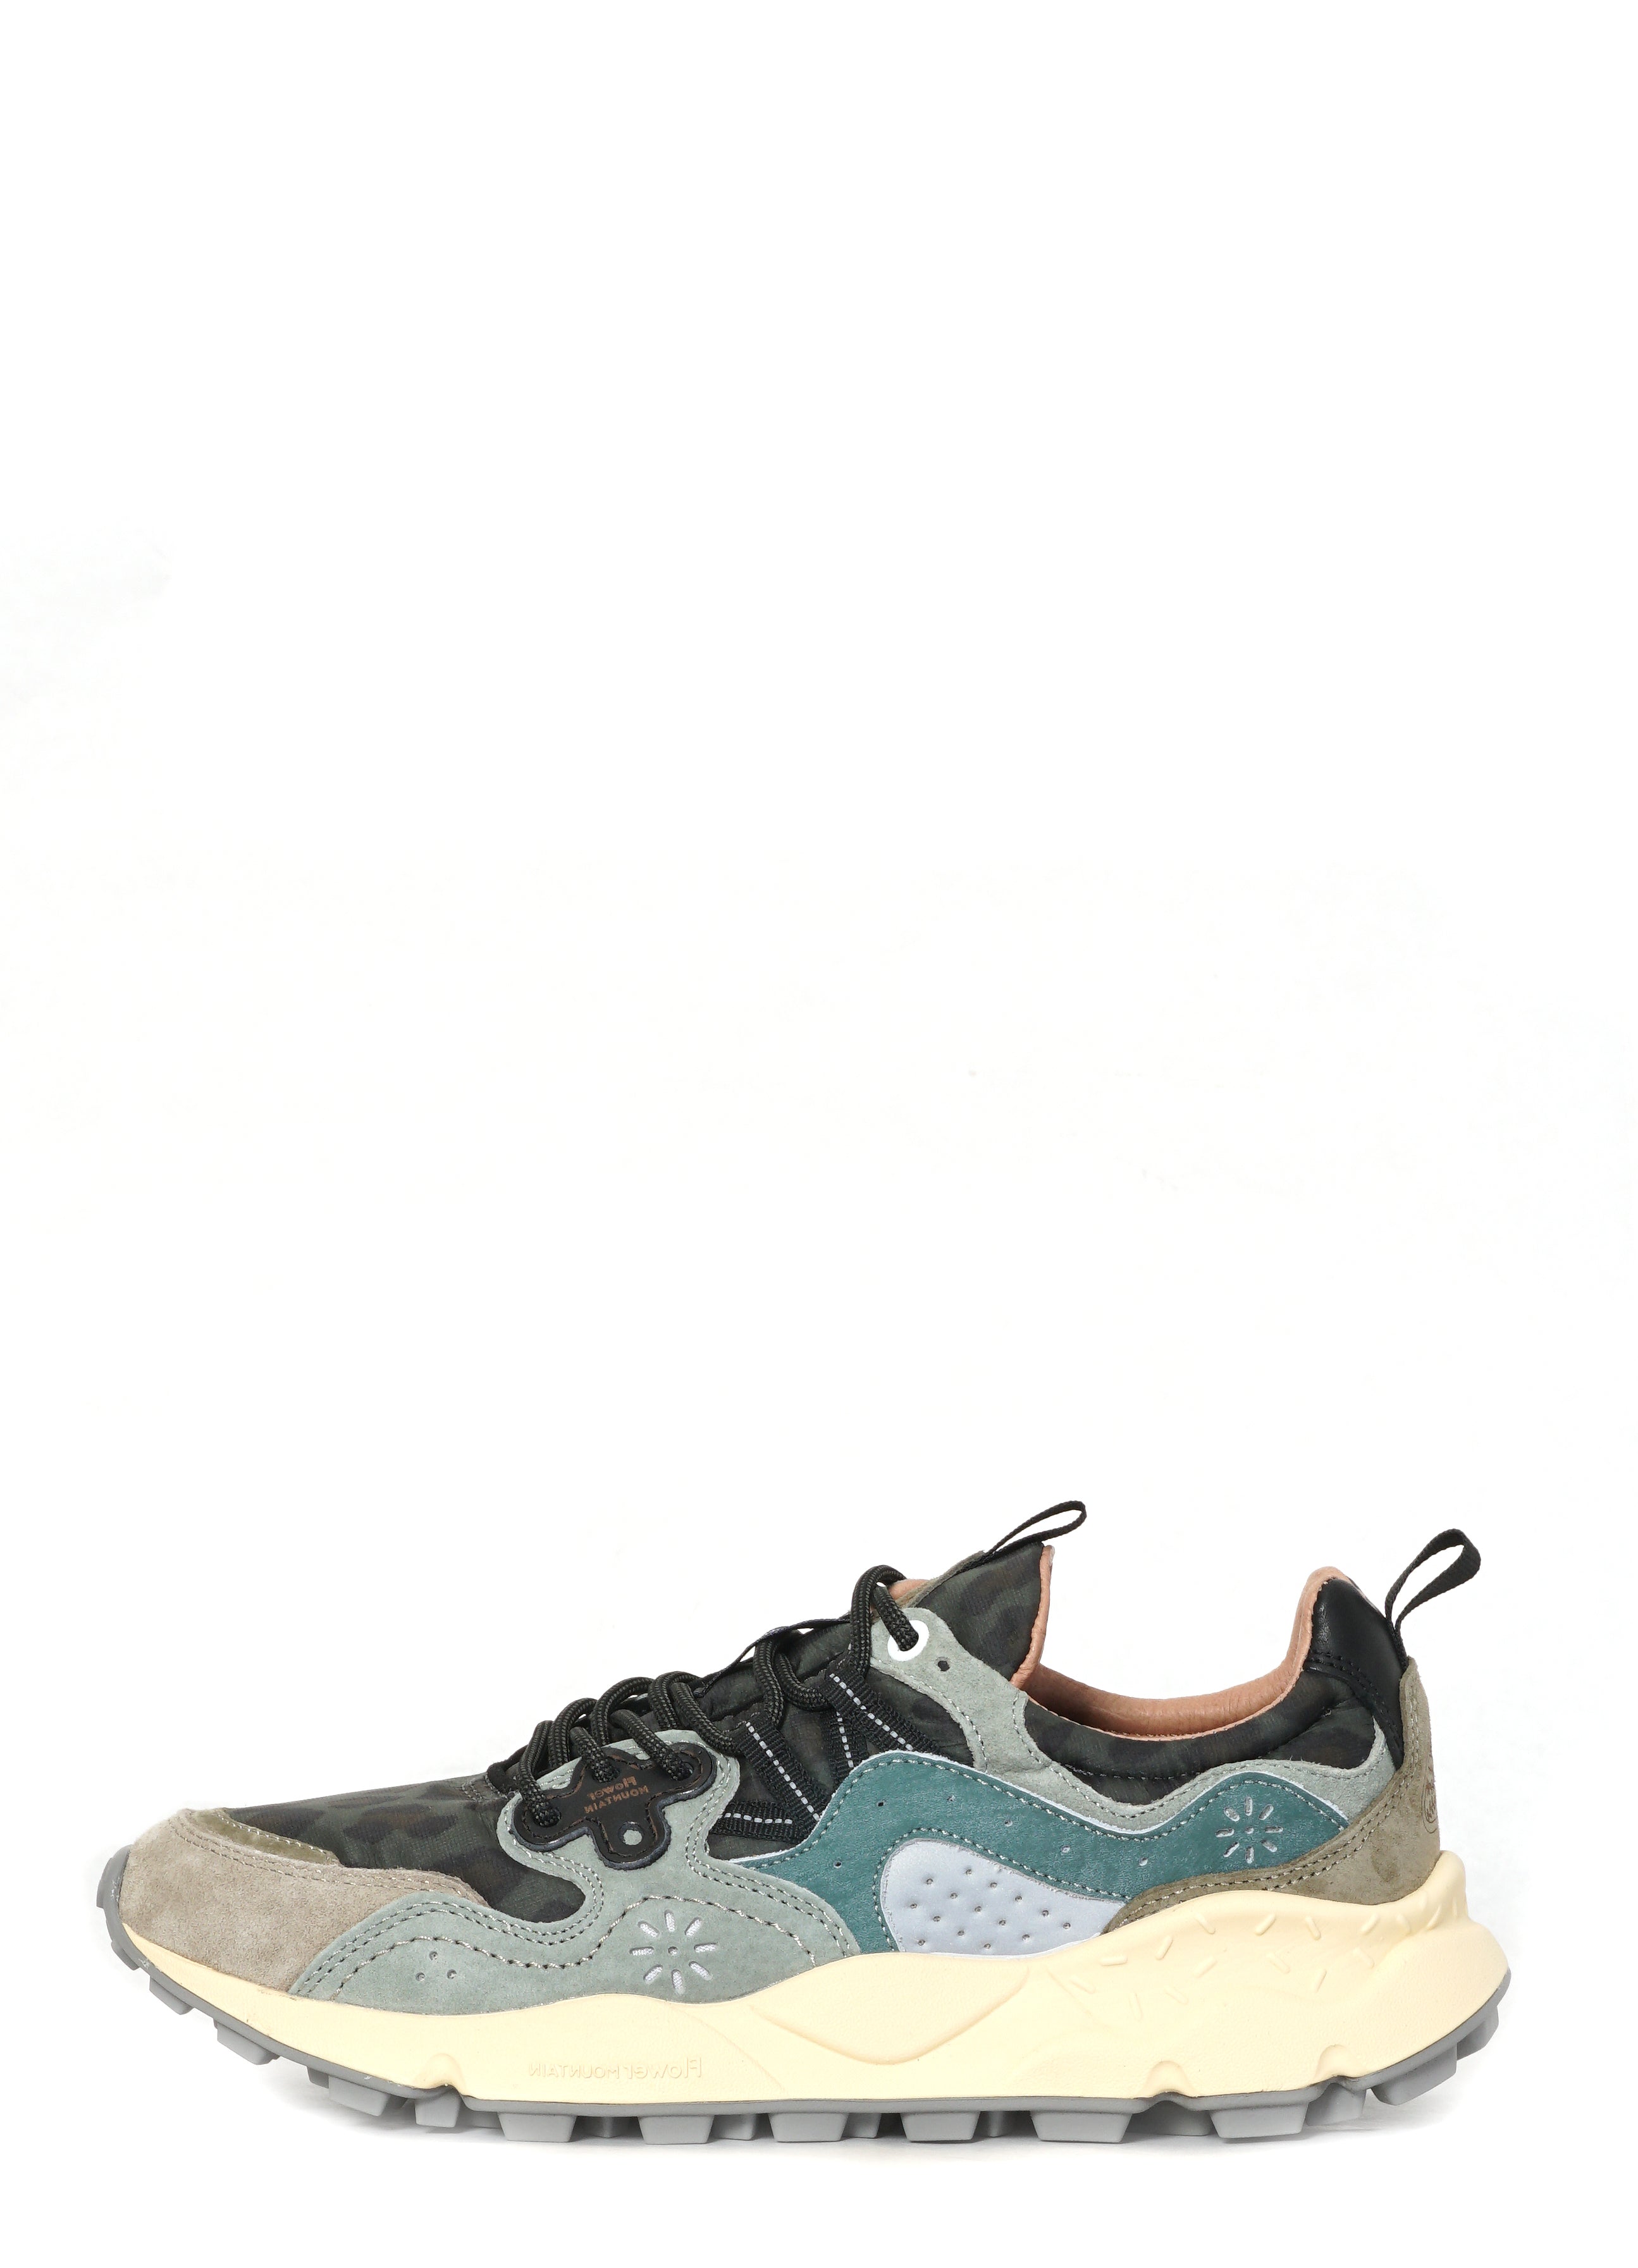 YAMANO 3 | Suede/Nylon Animal Print Sneaker | Anthracite Green